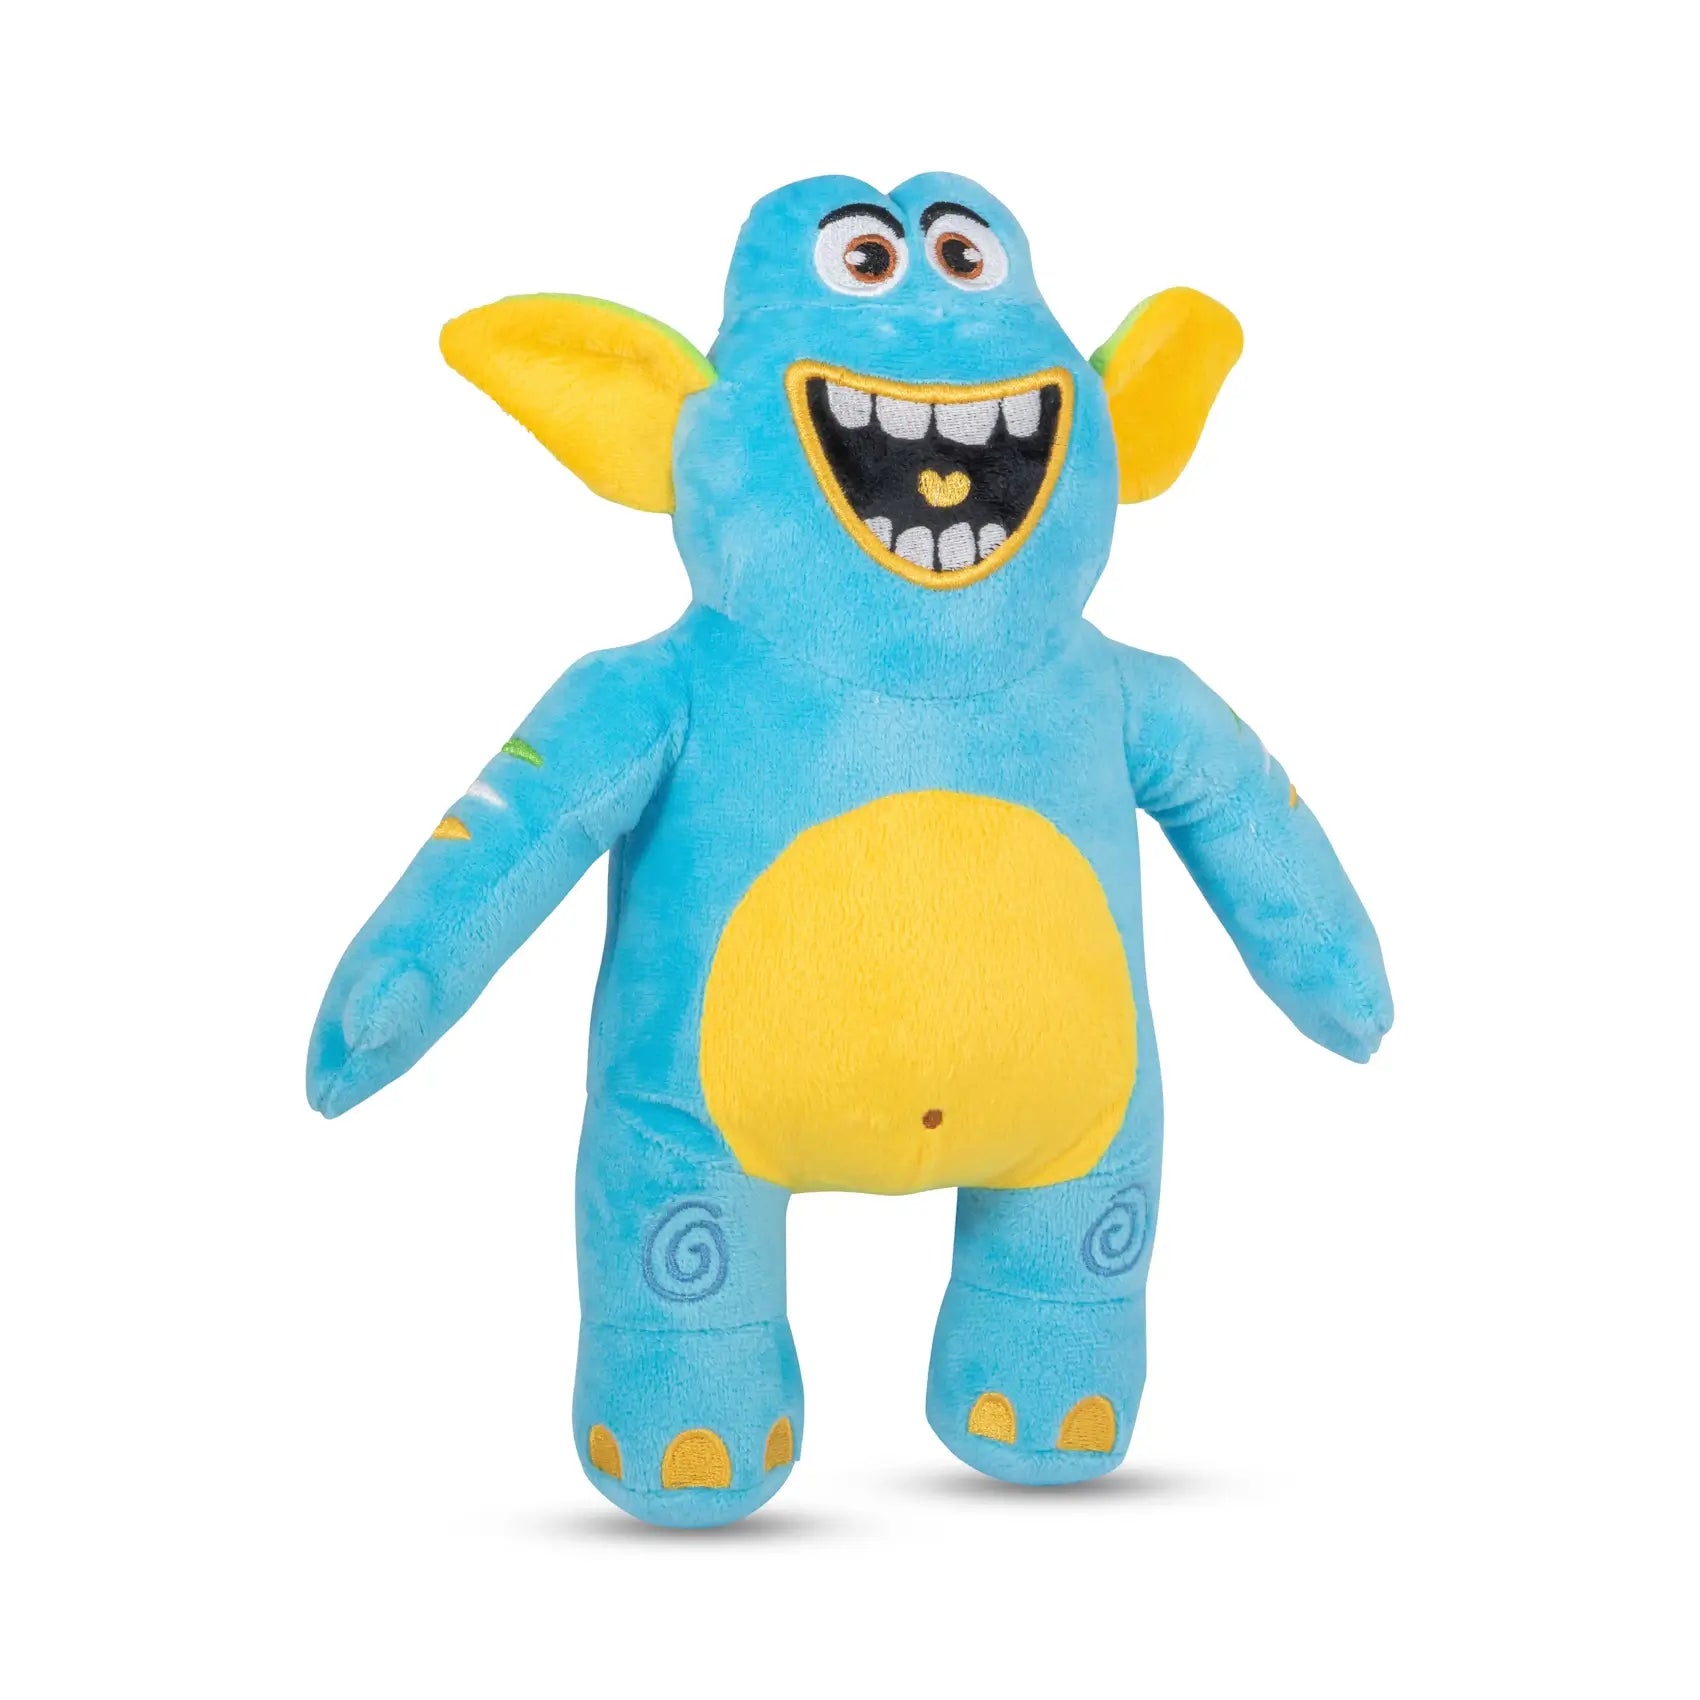 oloe-character-plush-toy-eko-blue-front-facing